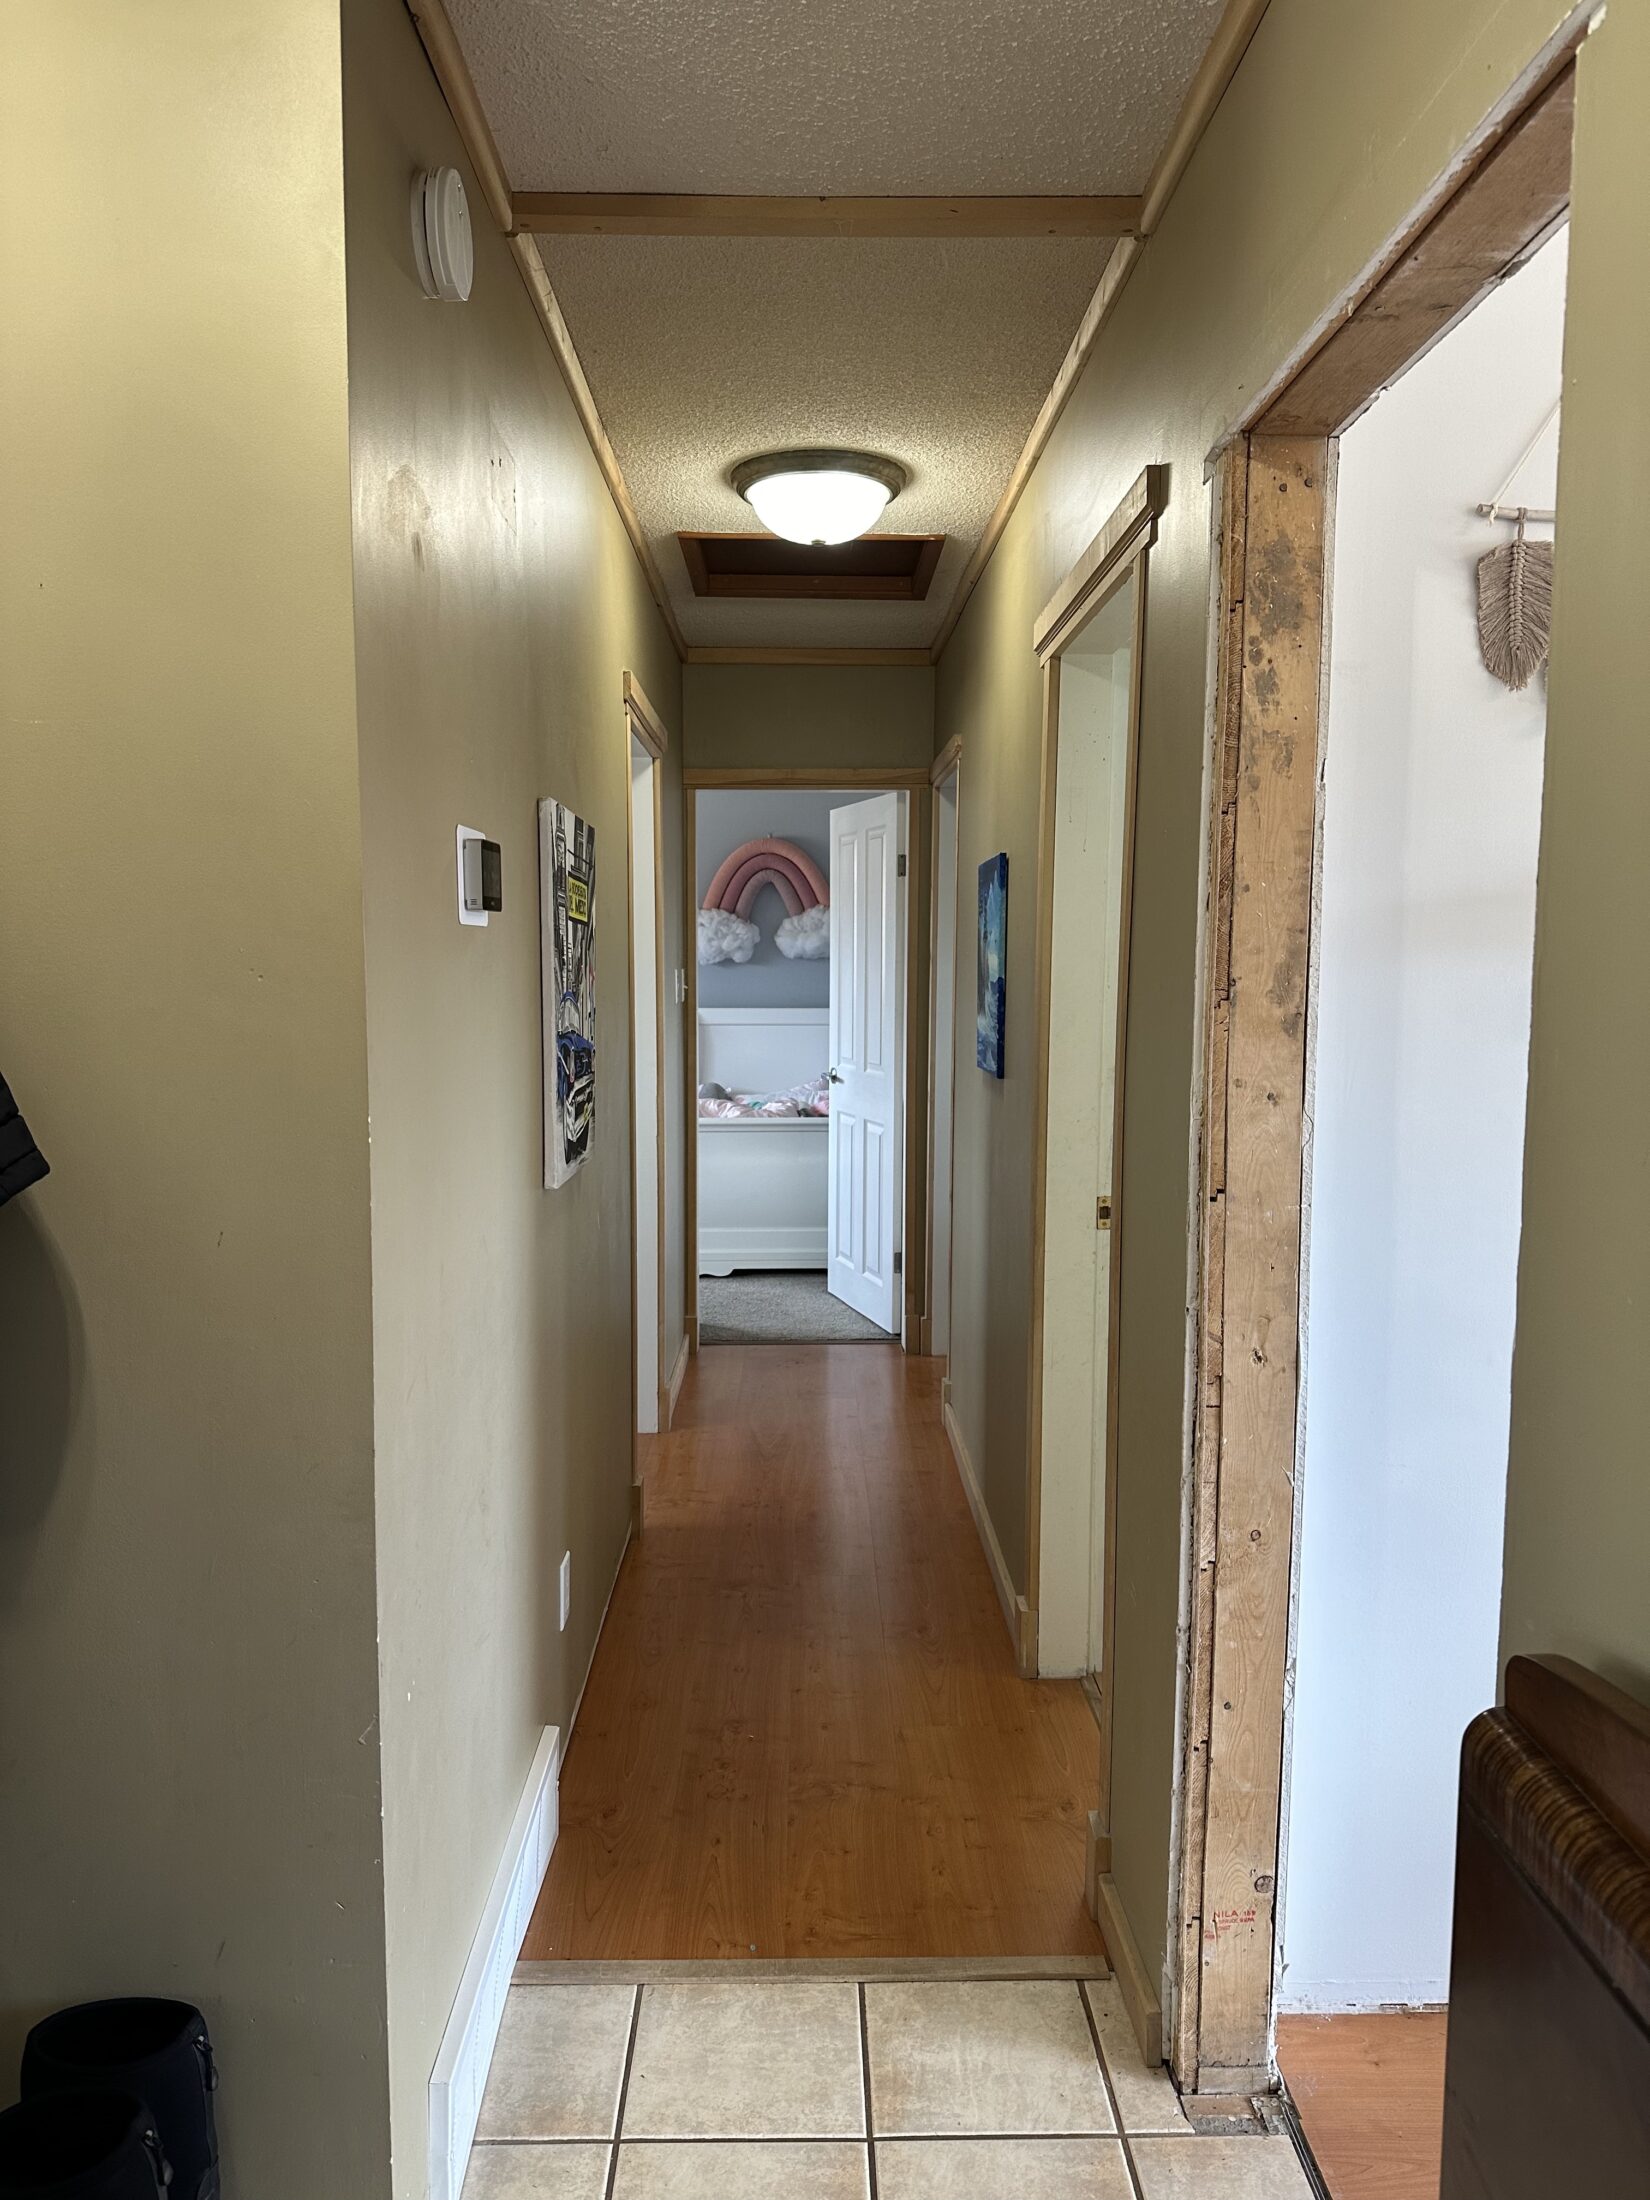 Hallway Renovation Ideas | DIY Hallway Renovation | Home Renovation on a Budget | One Room Challenge | Spring 2024 One Room Challenge | Hallway Inspiration